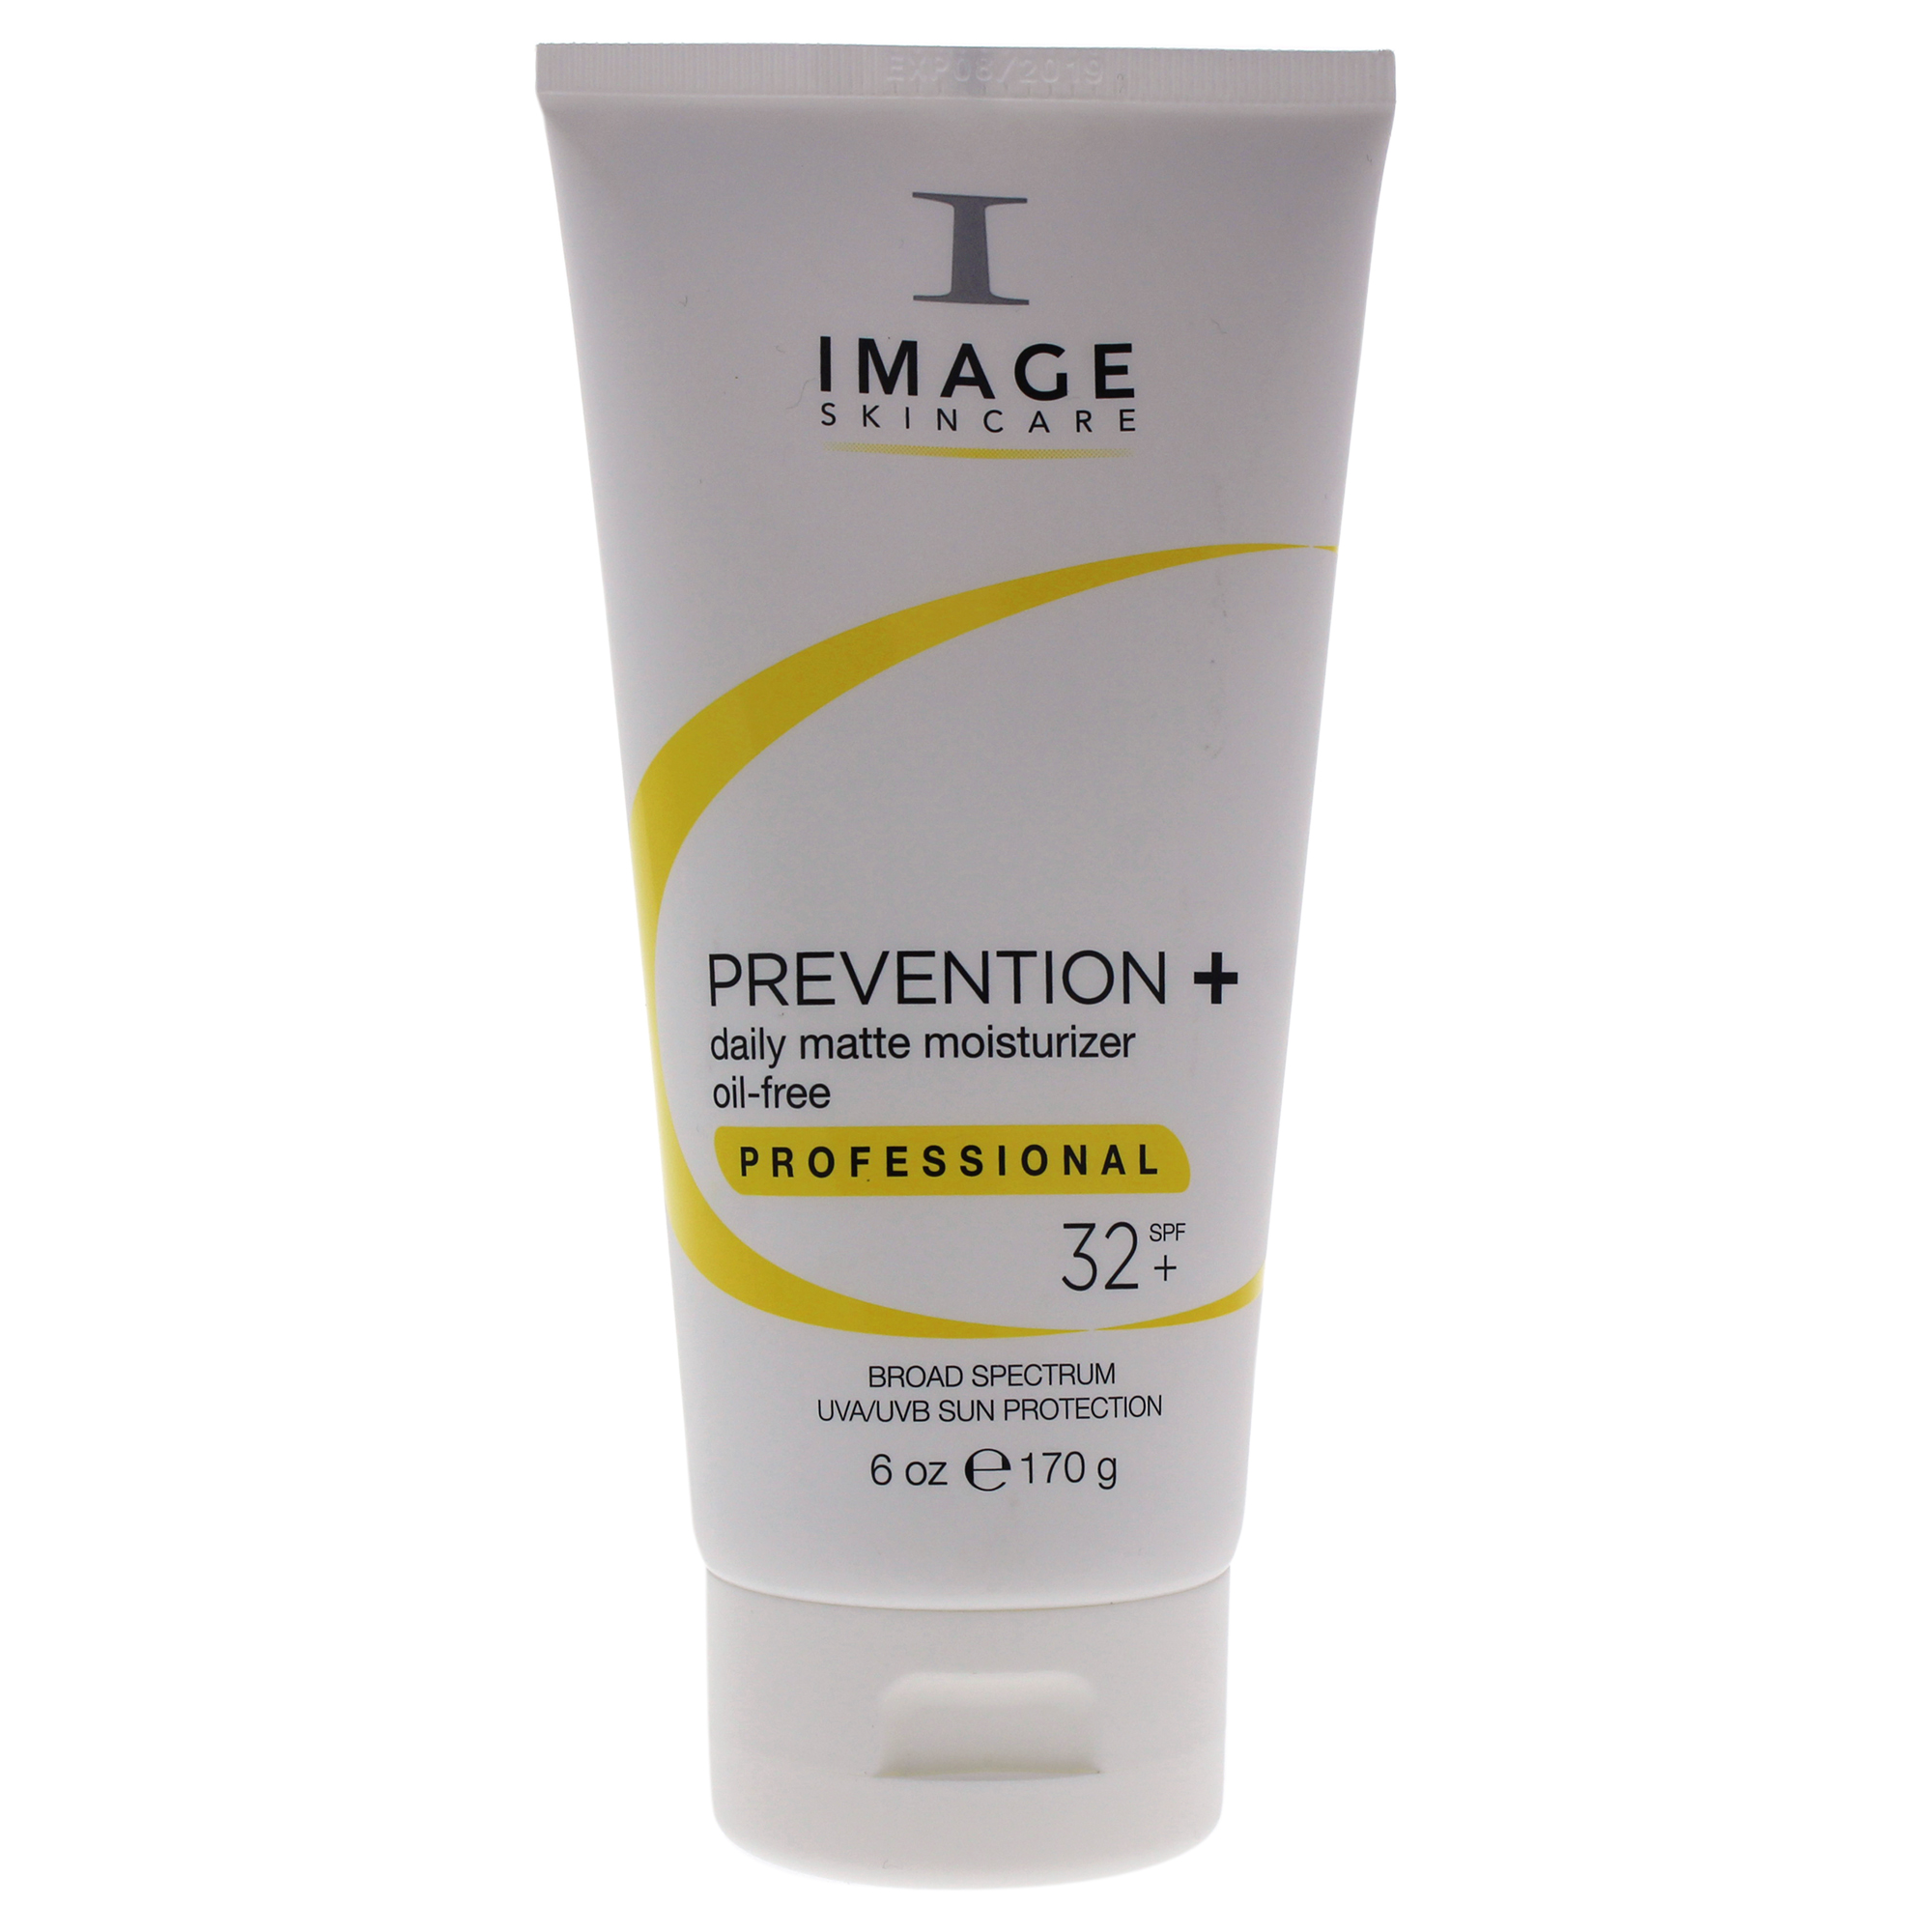 Image Skincare Prevention + Daily Matte Moisturizer 6 oz Oil-Free Professional SPF 32+ Broad Spectrum UVA/UVB Sun Protection - image 1 of 3